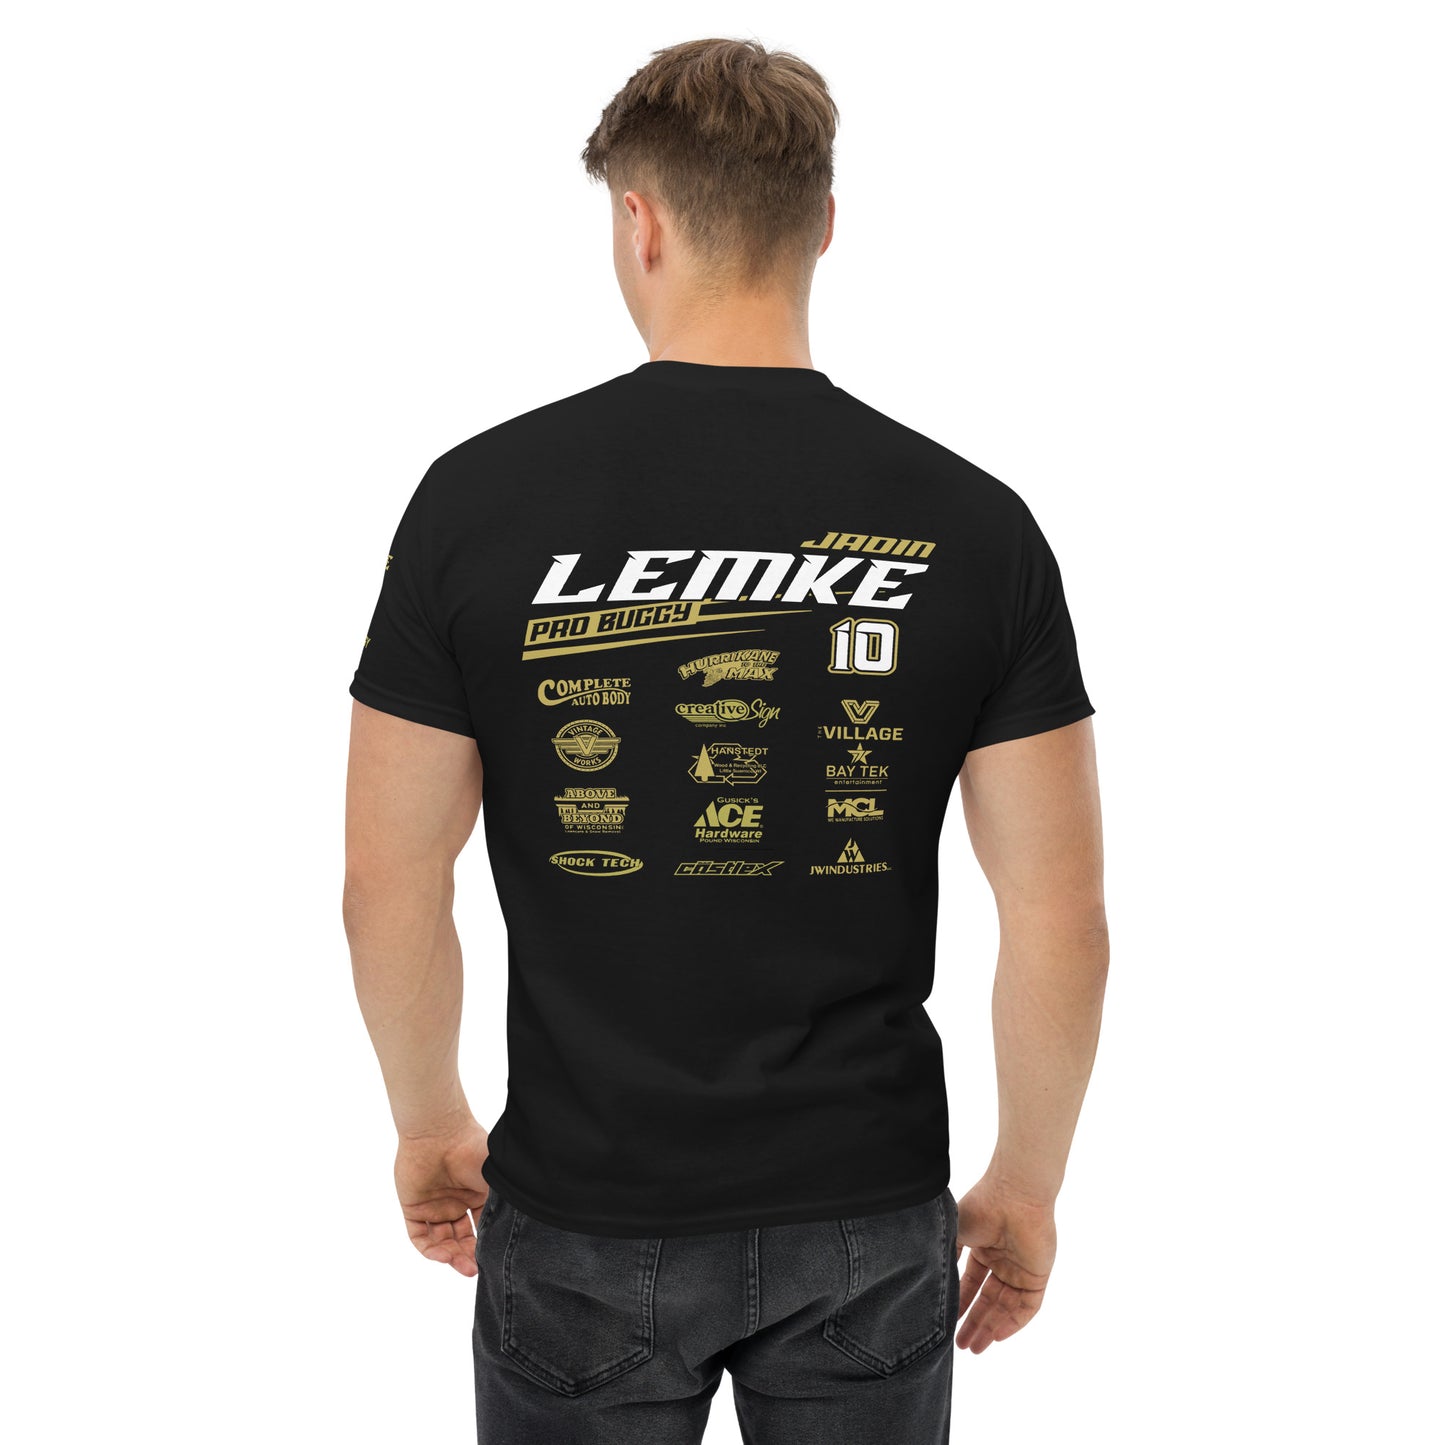 T-Shirt | Jadin Lemke